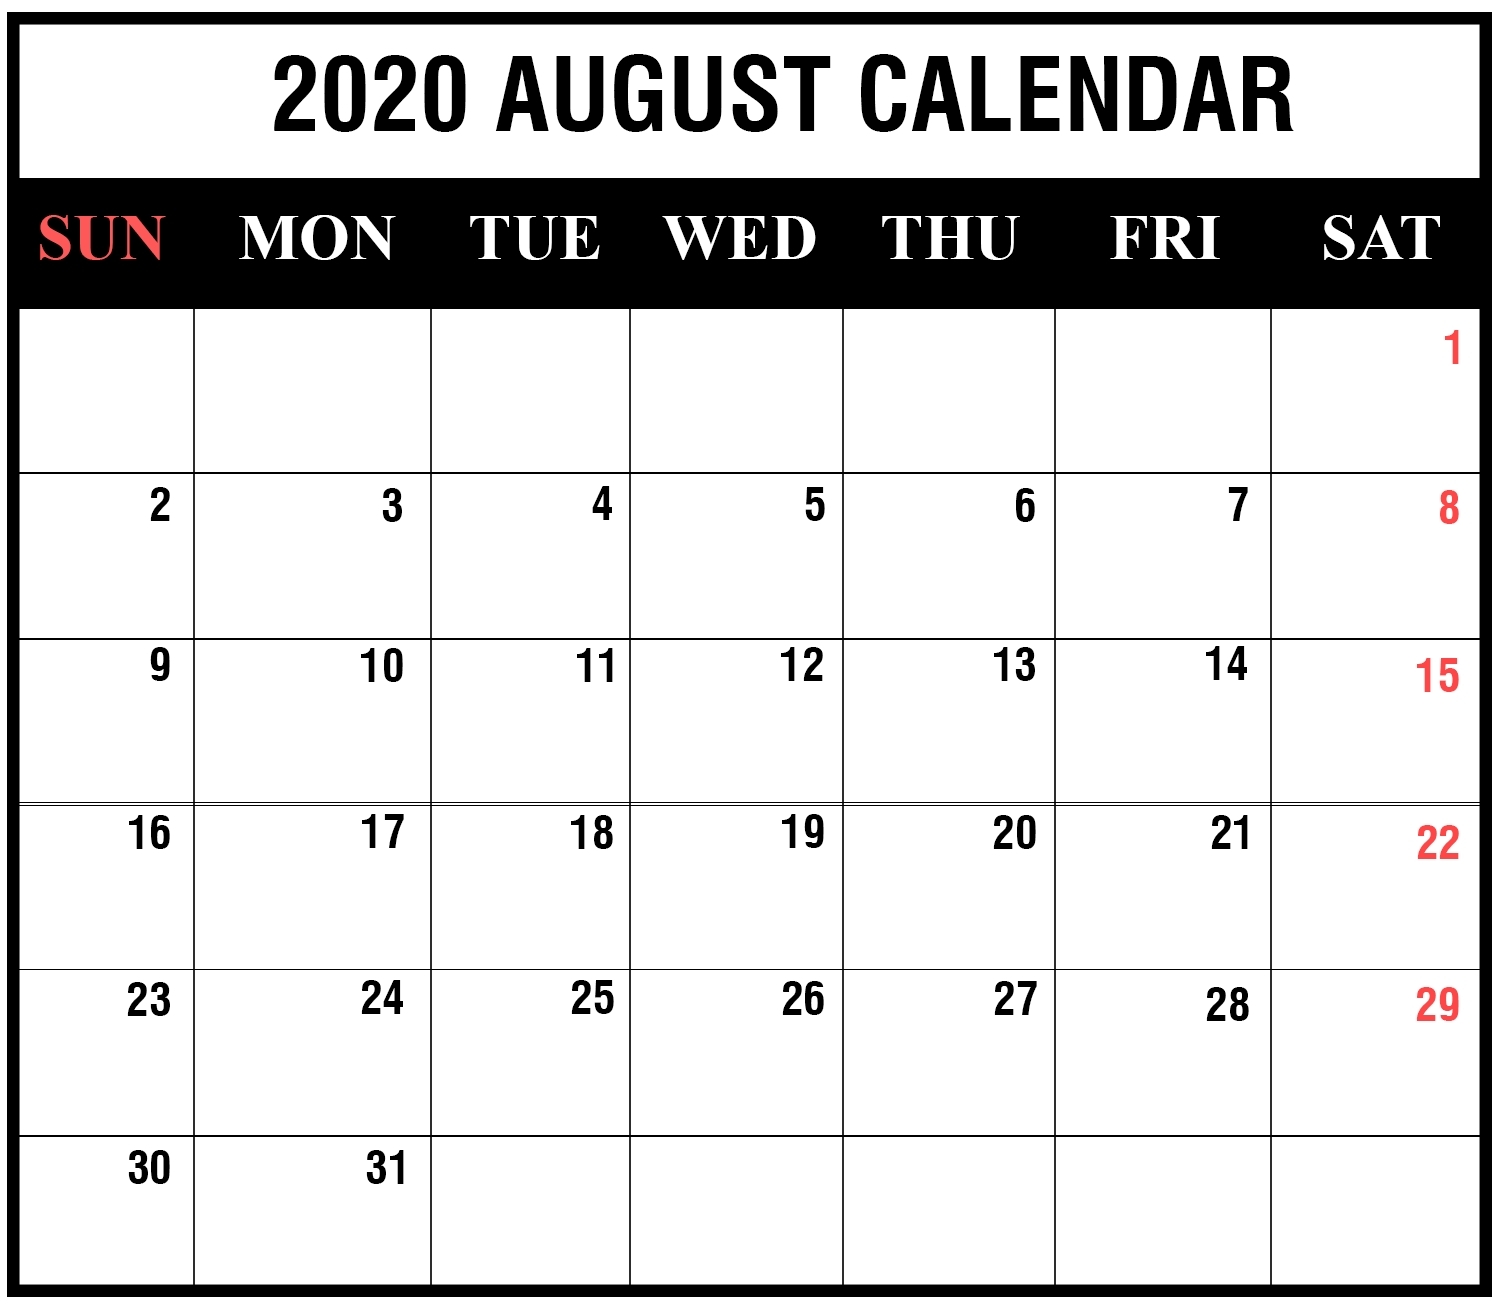 free printable 2020 calendar to i can edit calendar